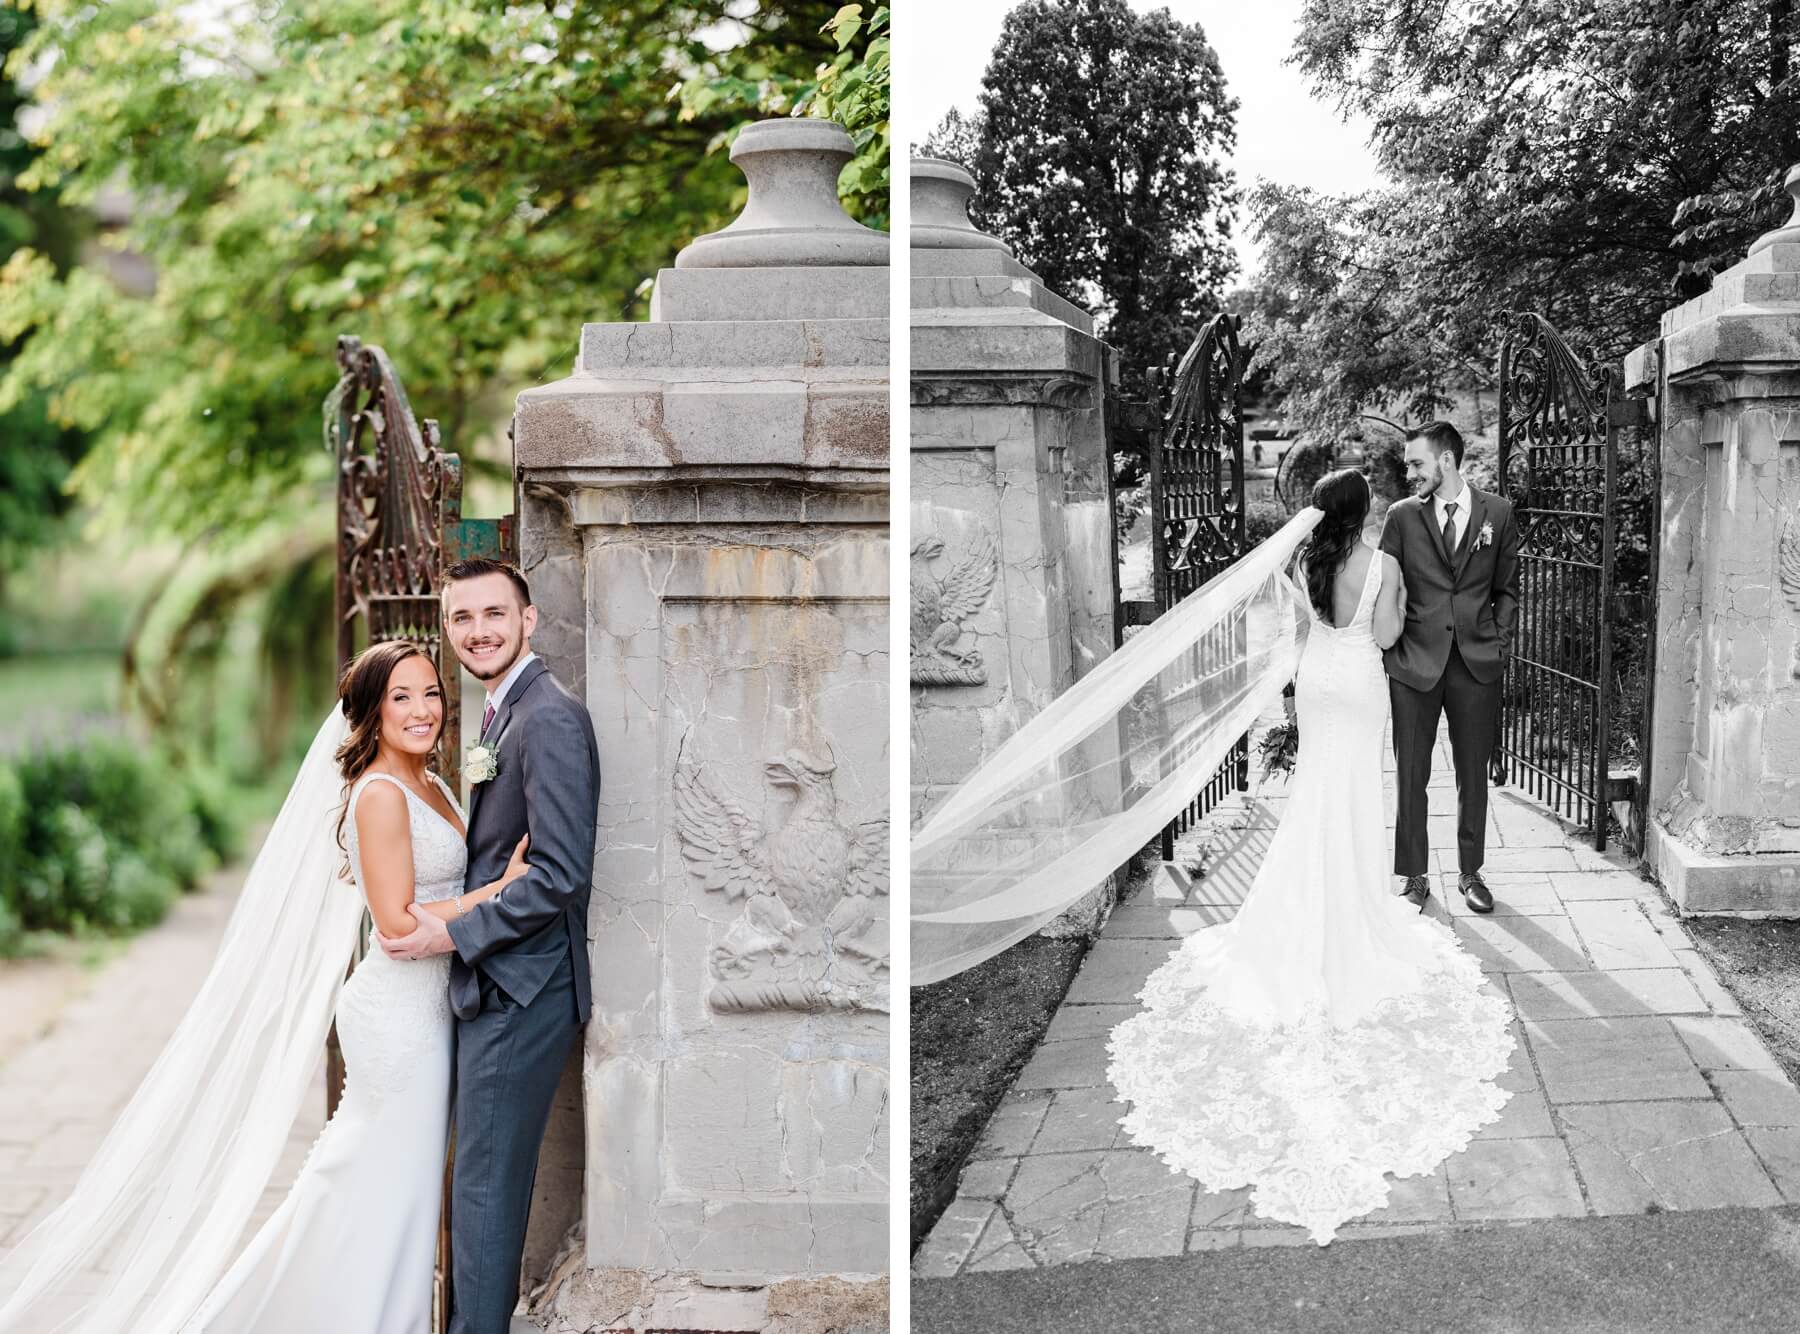 Bride and groom taking photos next to gray stone pillar in garden